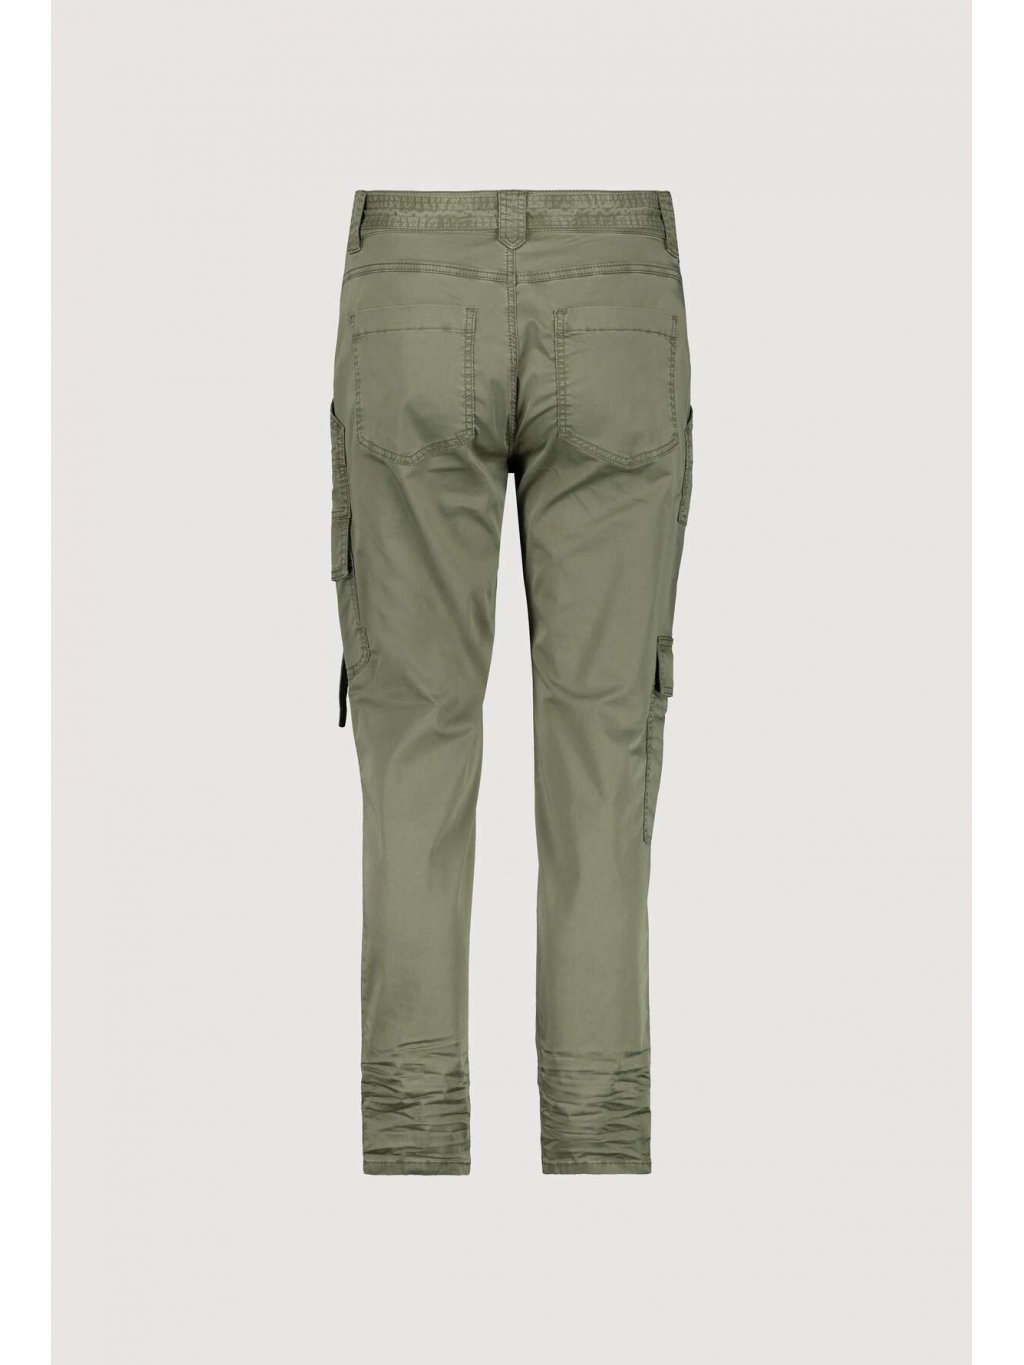 Kalhoty Monari 6987 zelené cargo styl